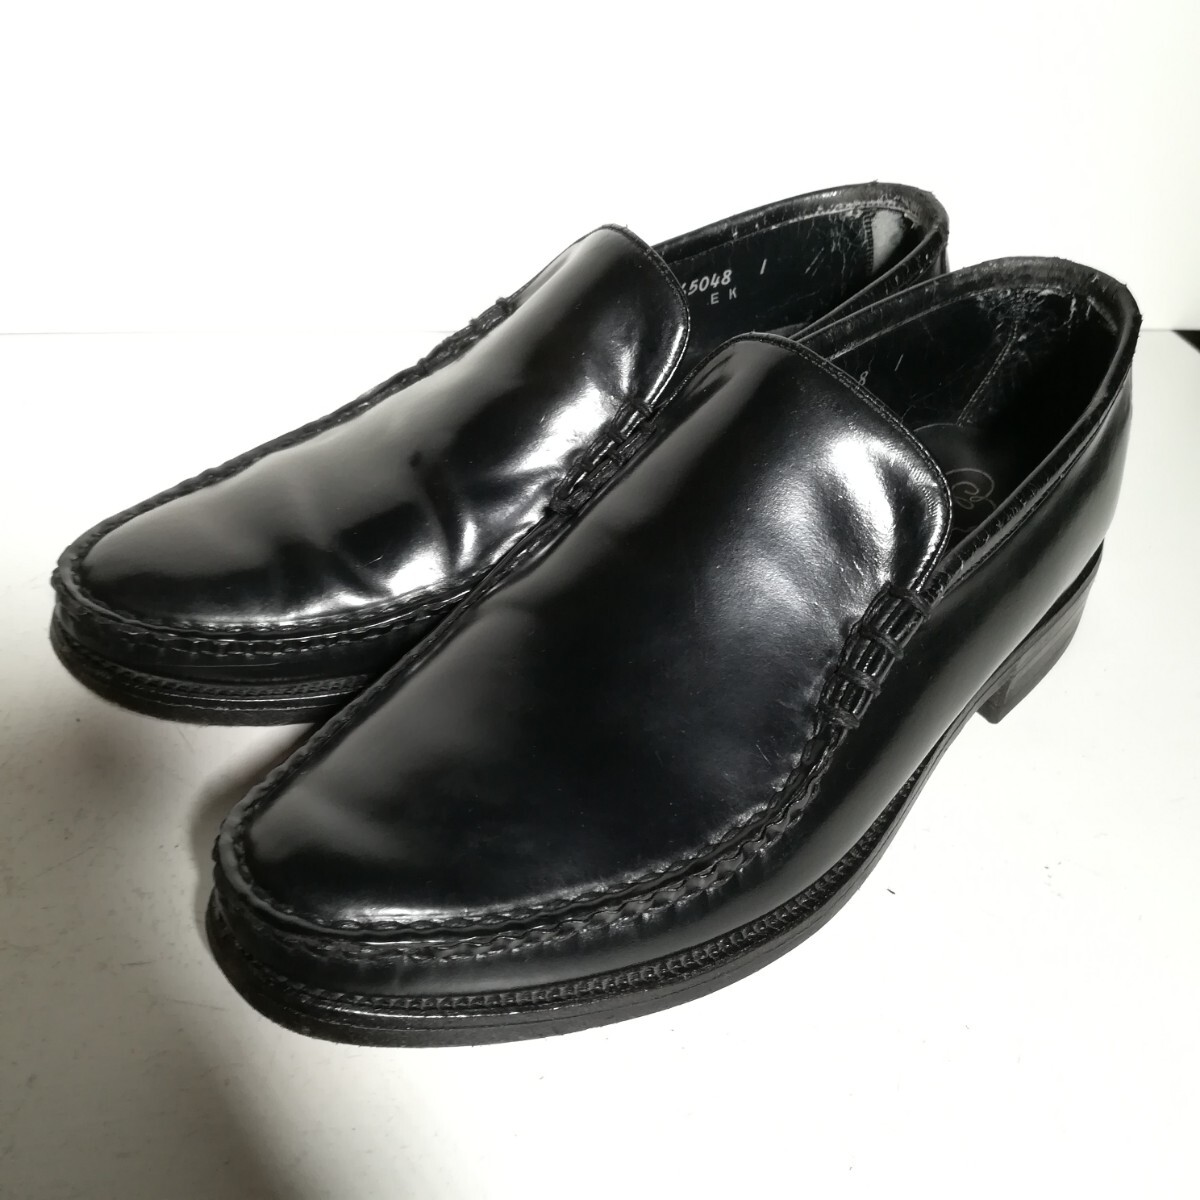 4119 * flow car imFlorsheim* 92010 cordovan slip-on shoes Loafer 5E 23.0cm degree black dress shoes business leather shoes gentleman shoes original leather 